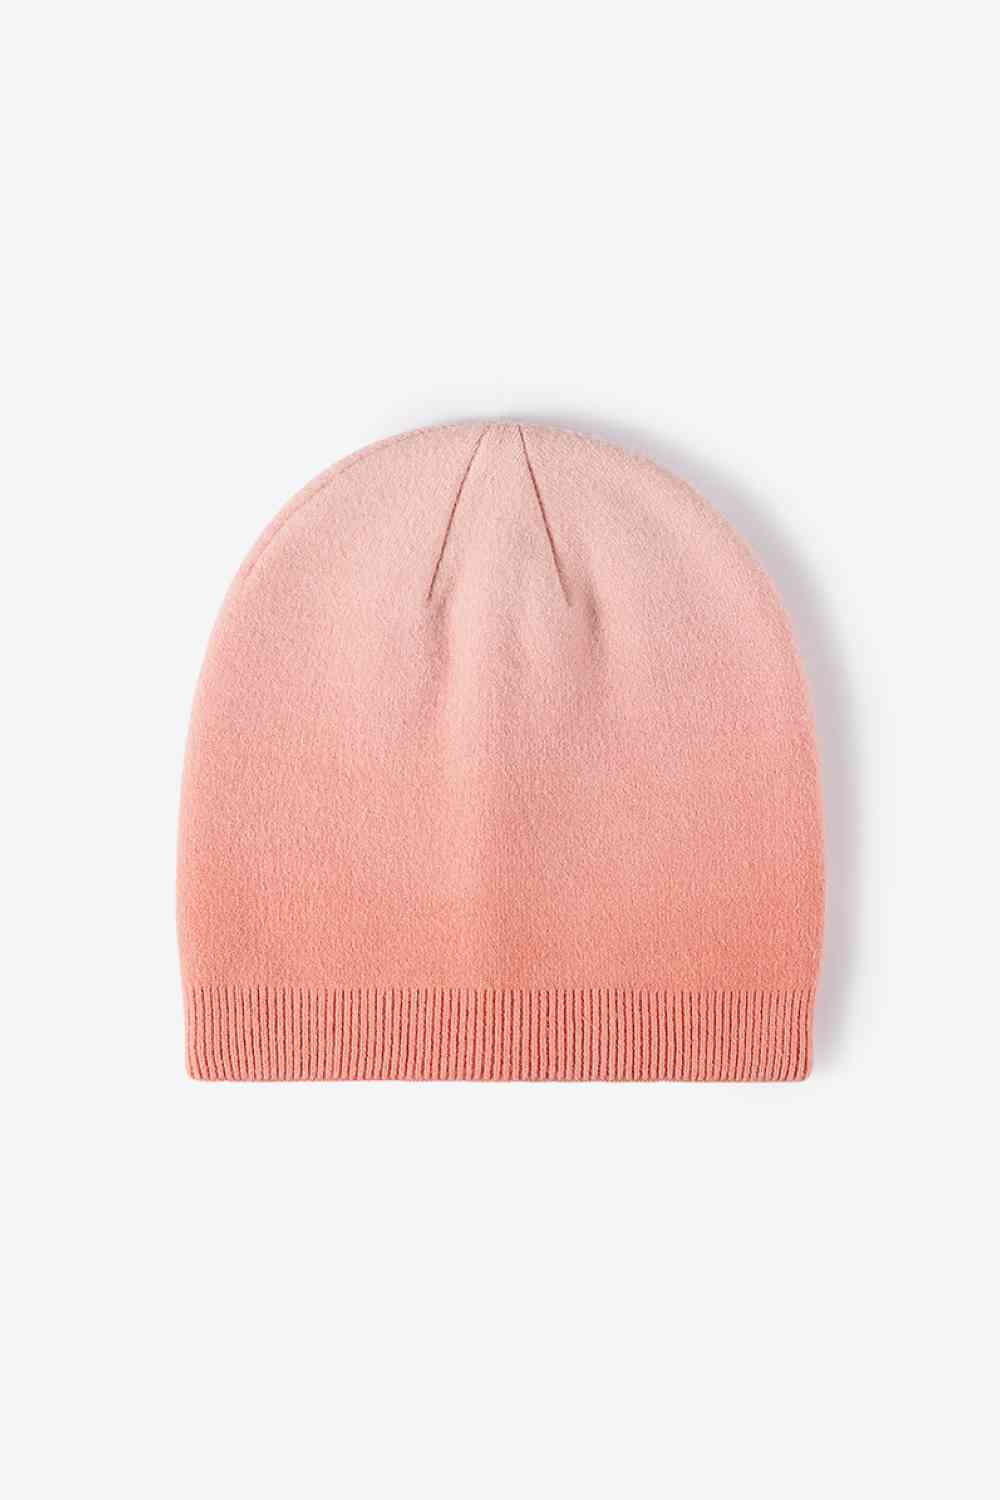 Gradient Knit Beanie Pink One Size